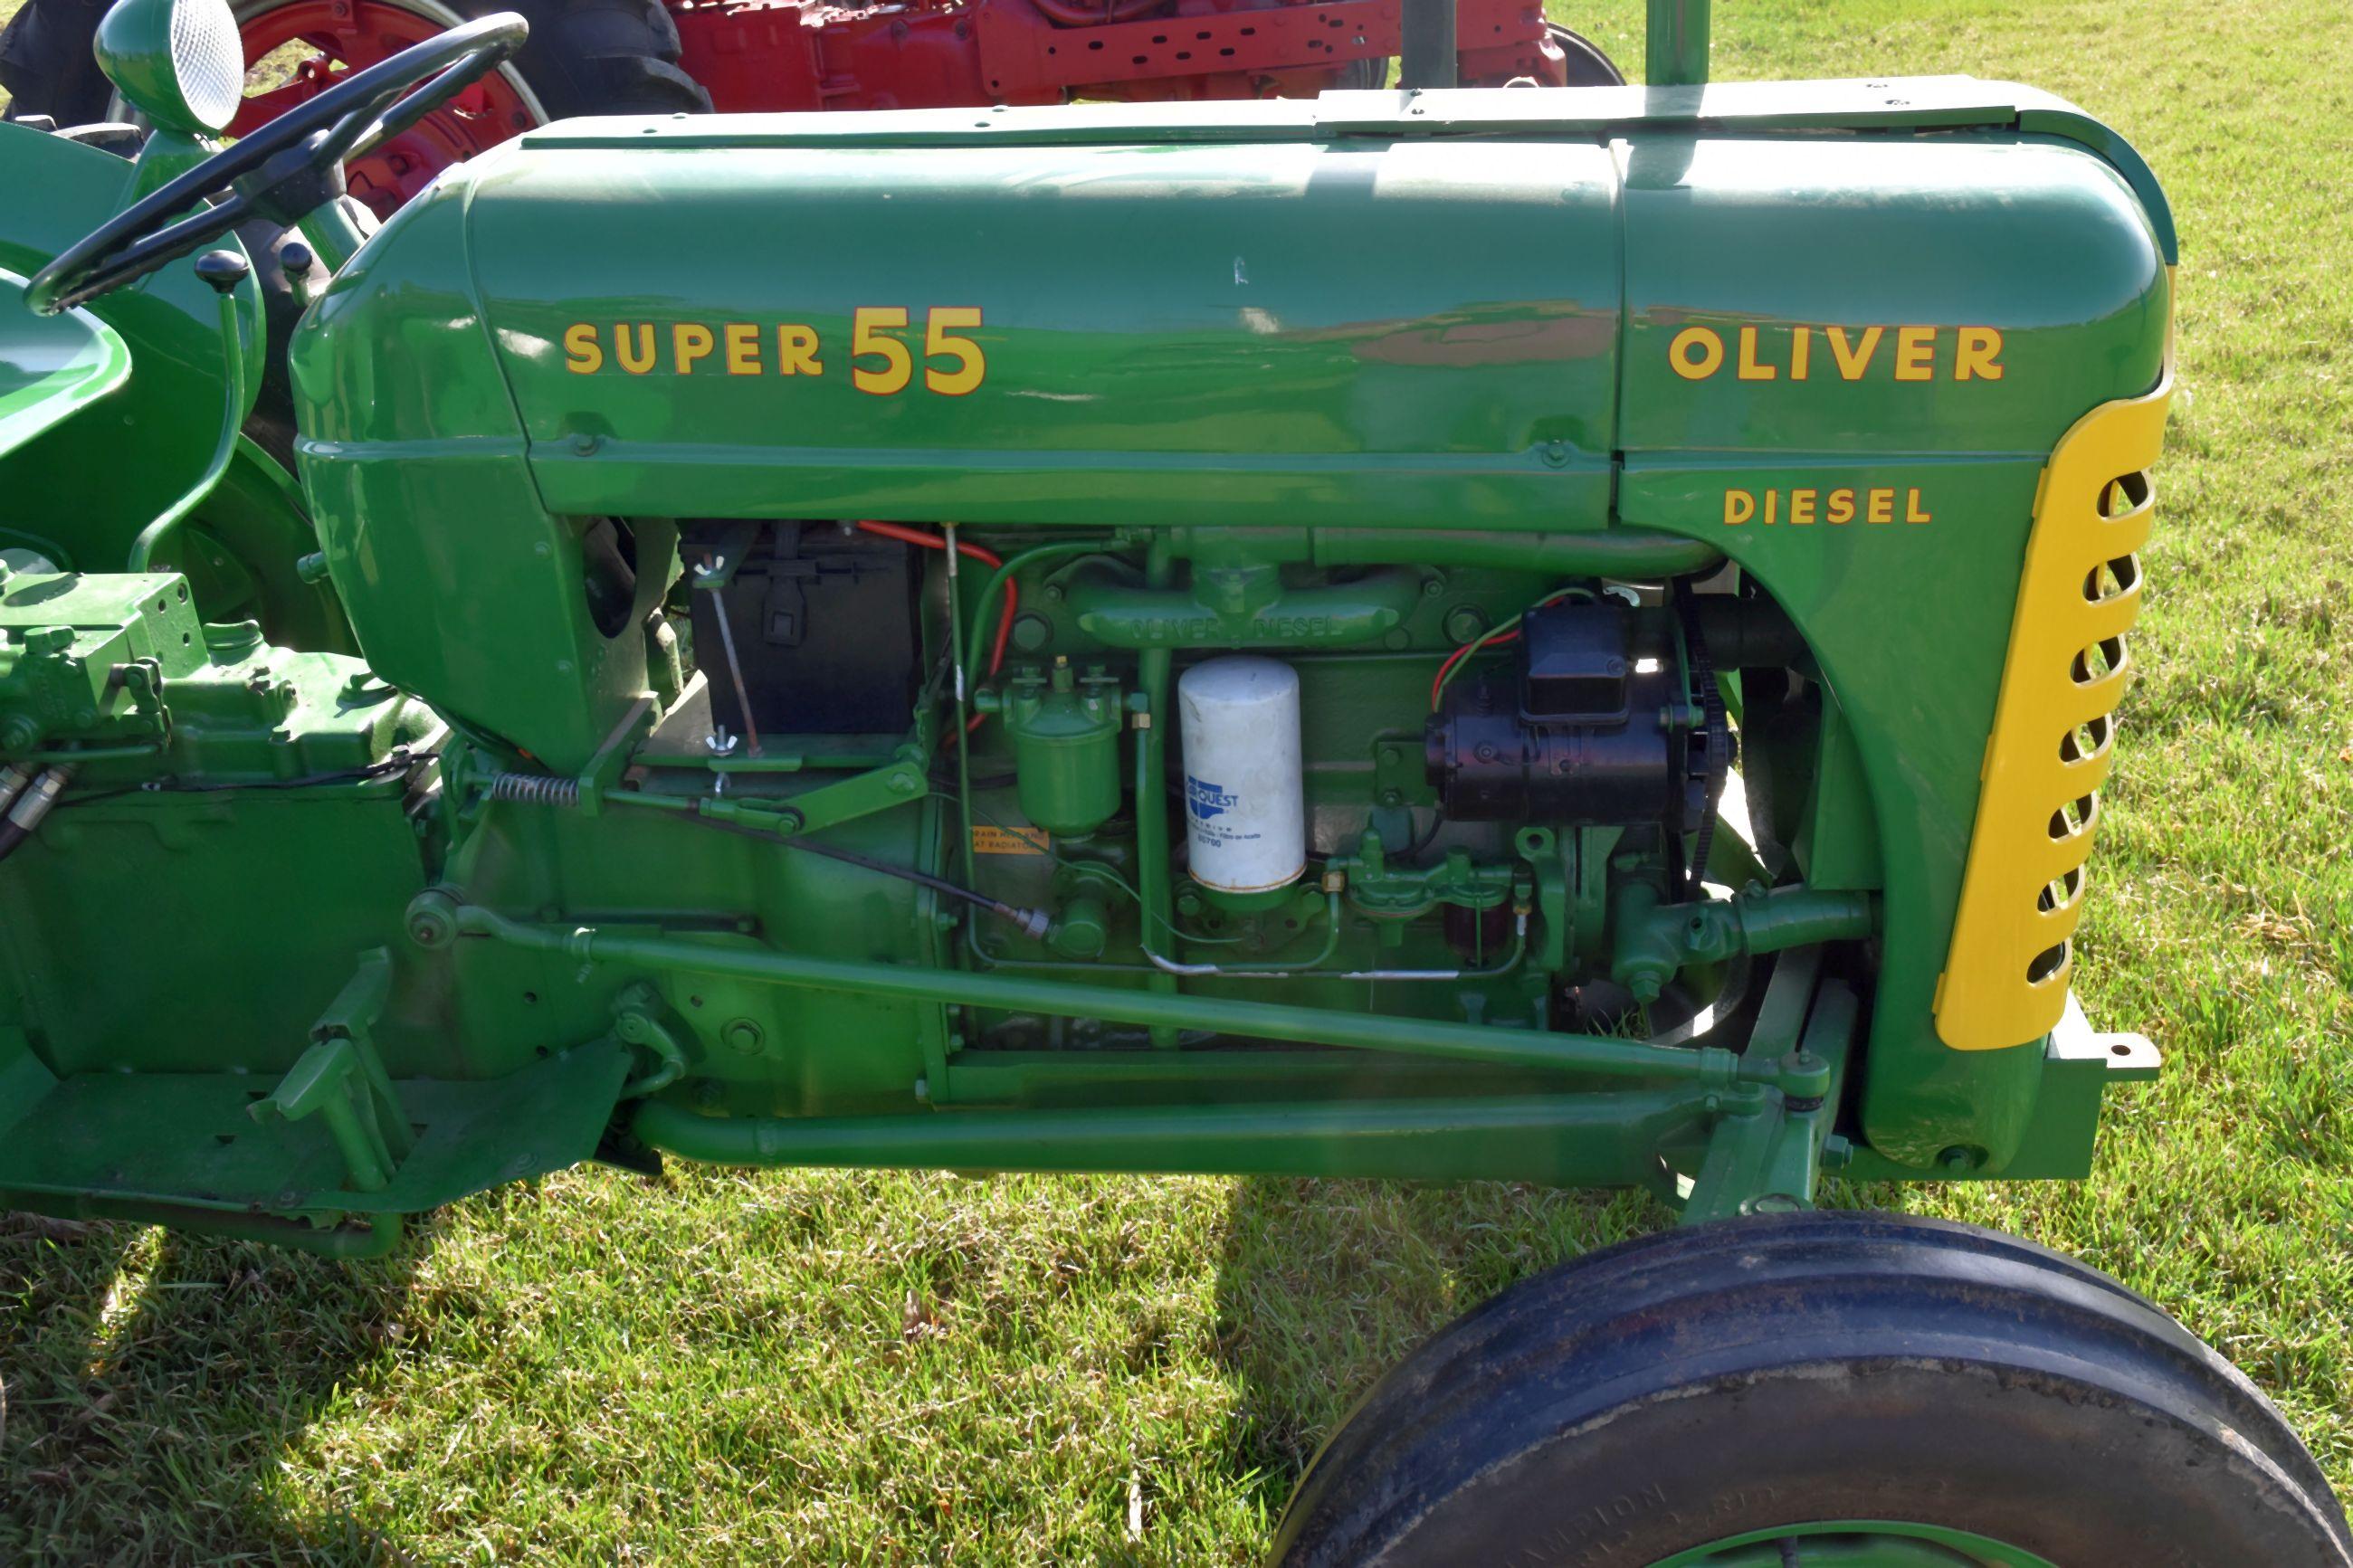 Oliver Super 55 Diesel Utility, New Tires, 3pt. Hitch, SN: 18540518